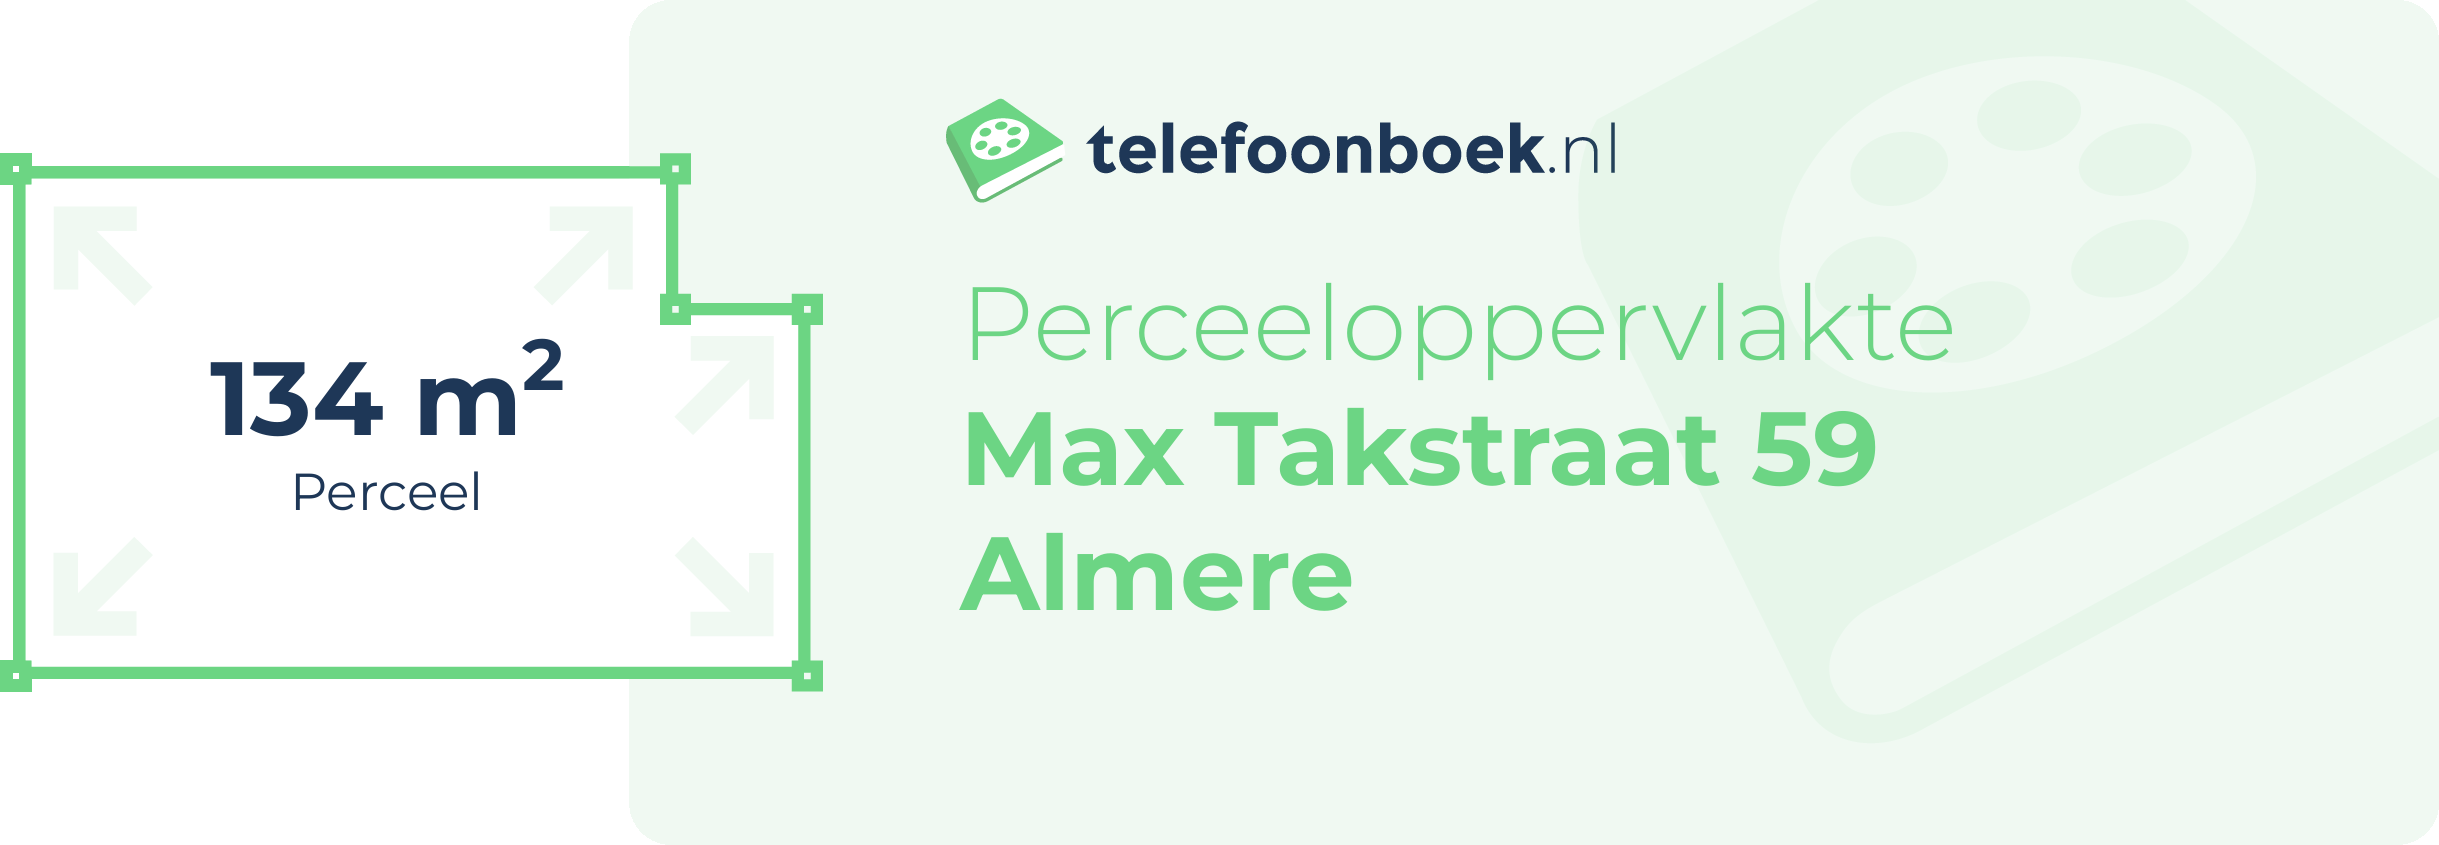 Perceeloppervlakte Max Takstraat 59 Almere